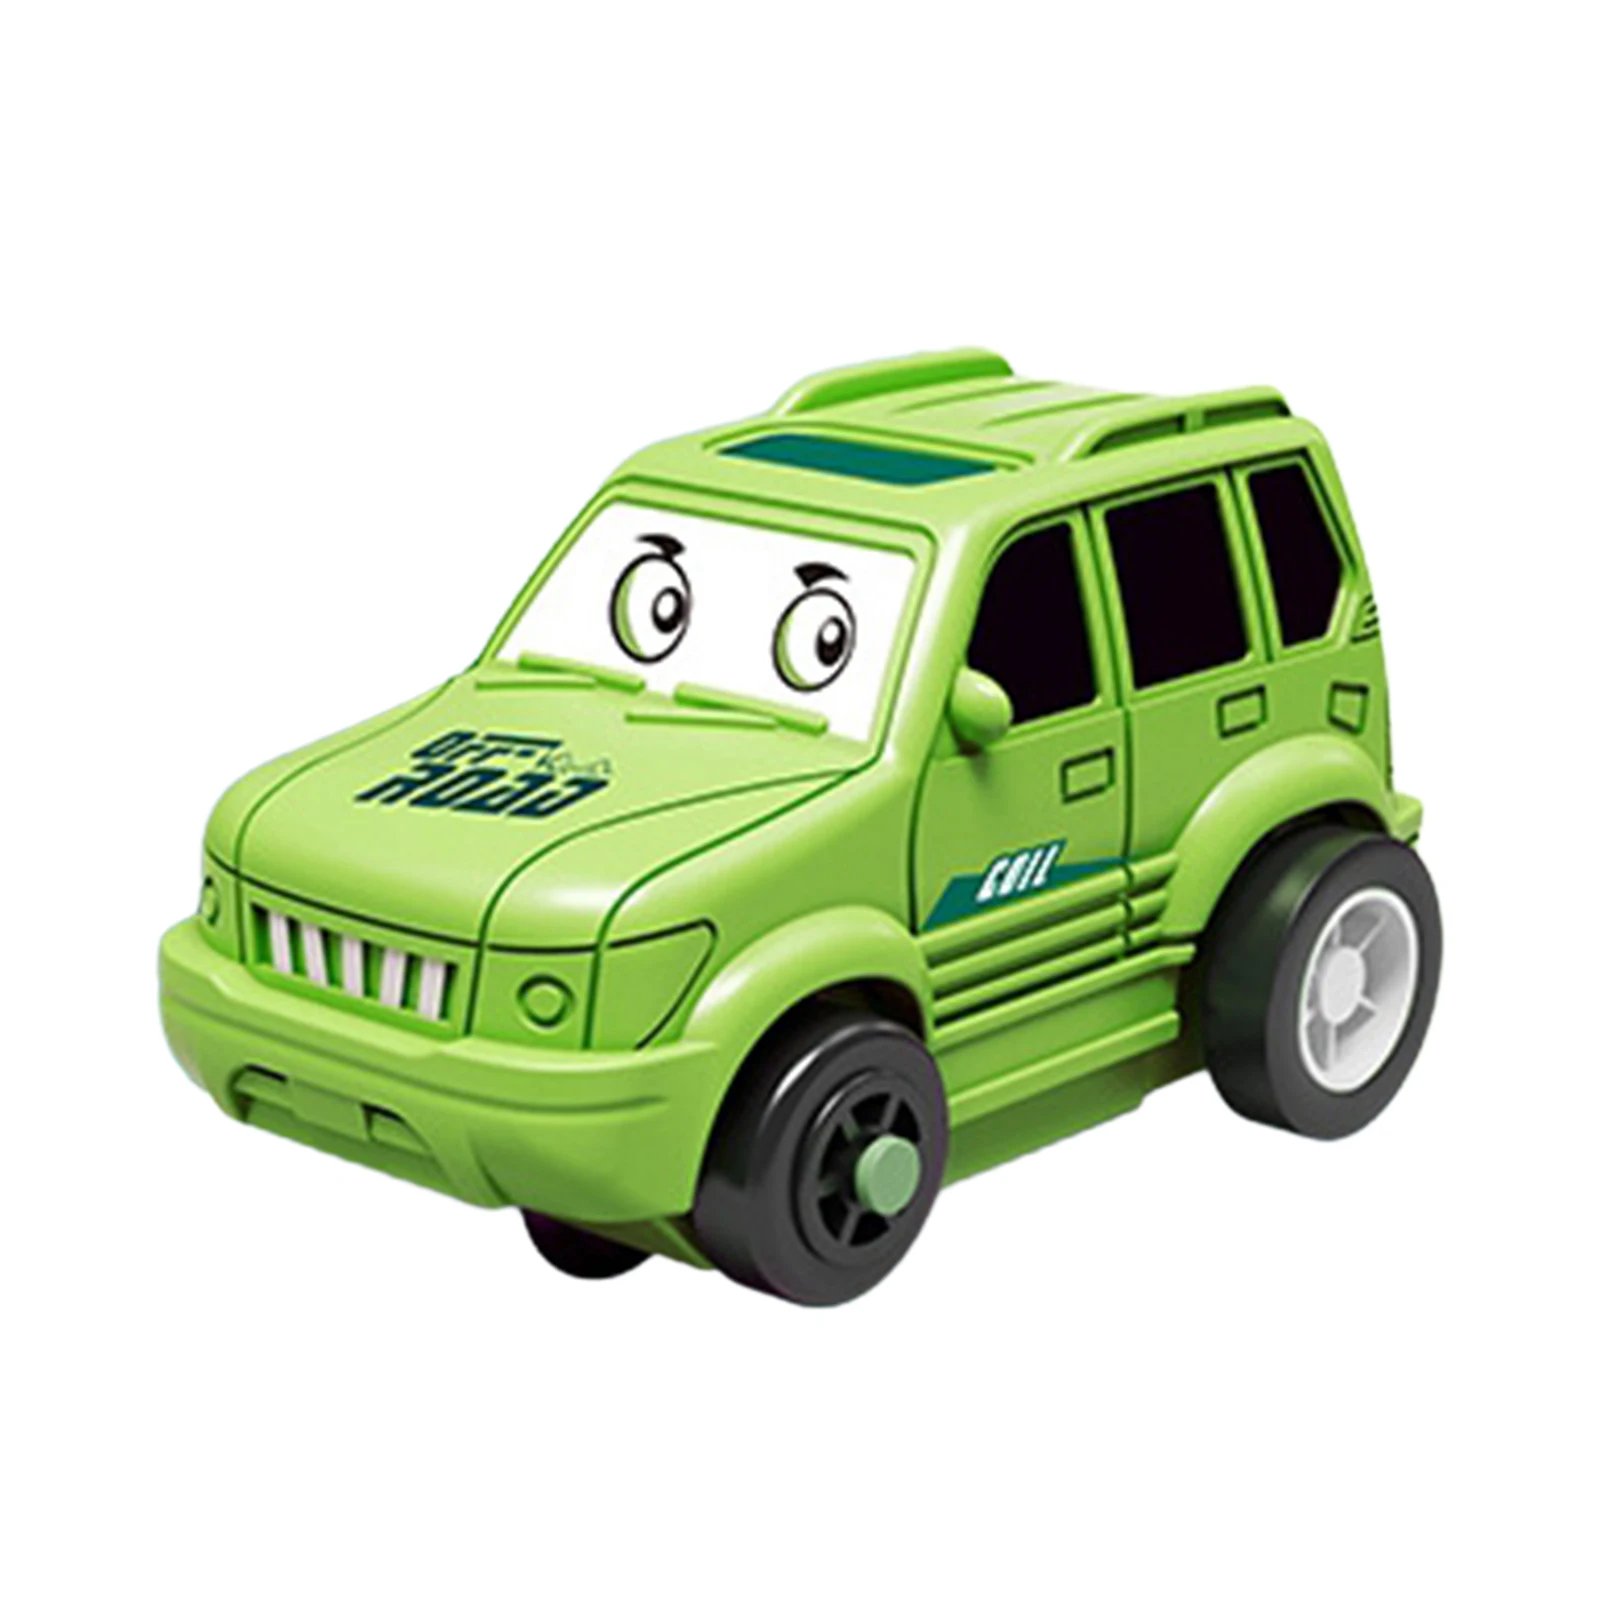 Car green